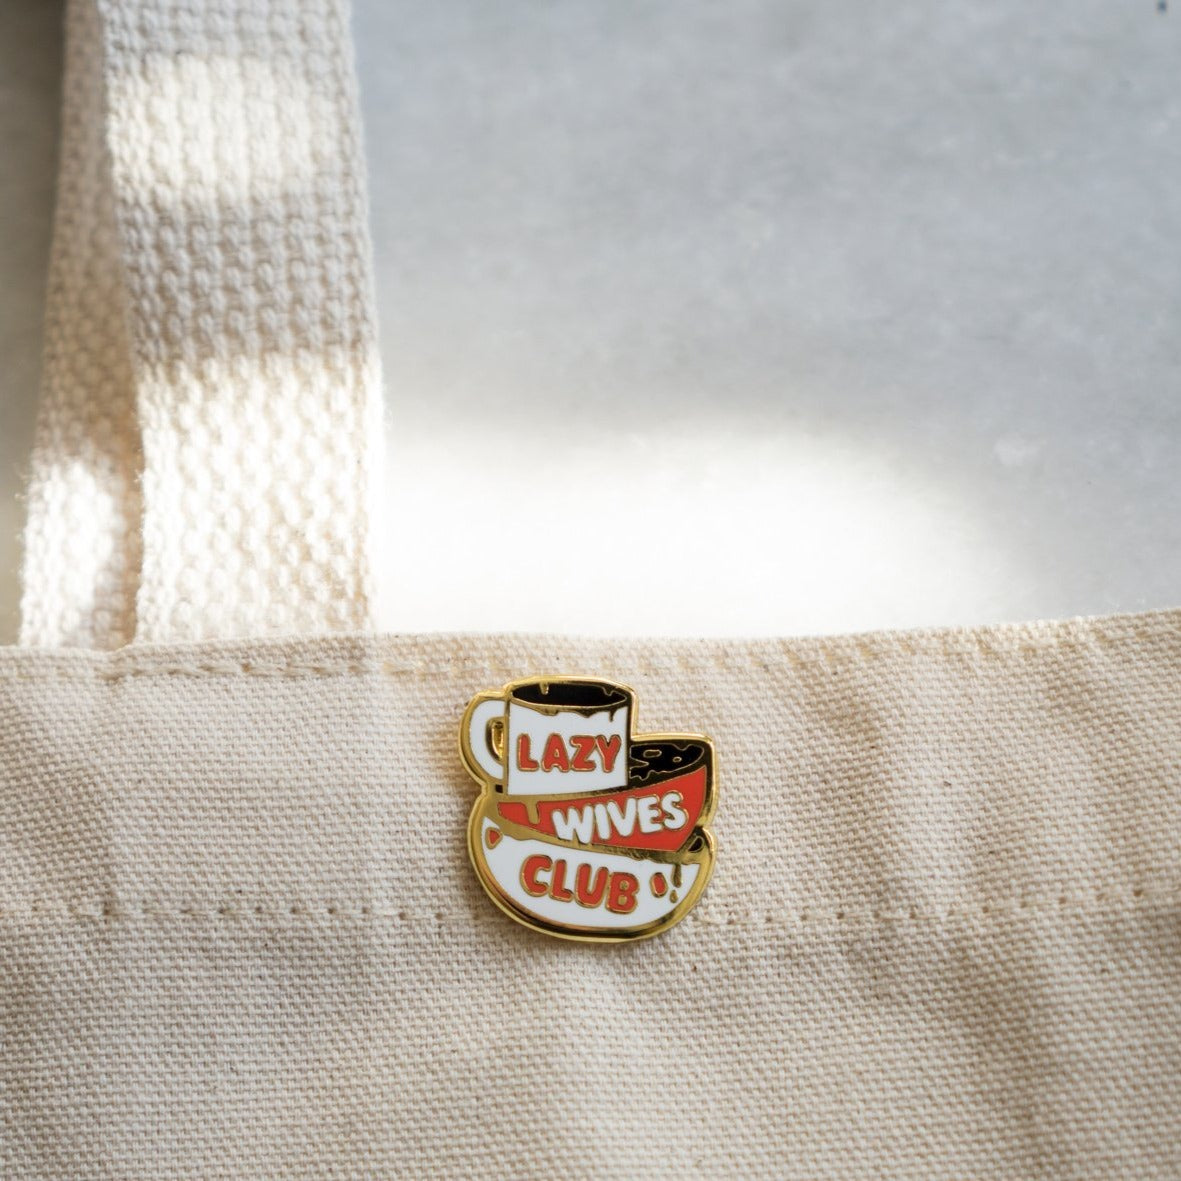 Lazy Wives Club Enamel Pin Badge